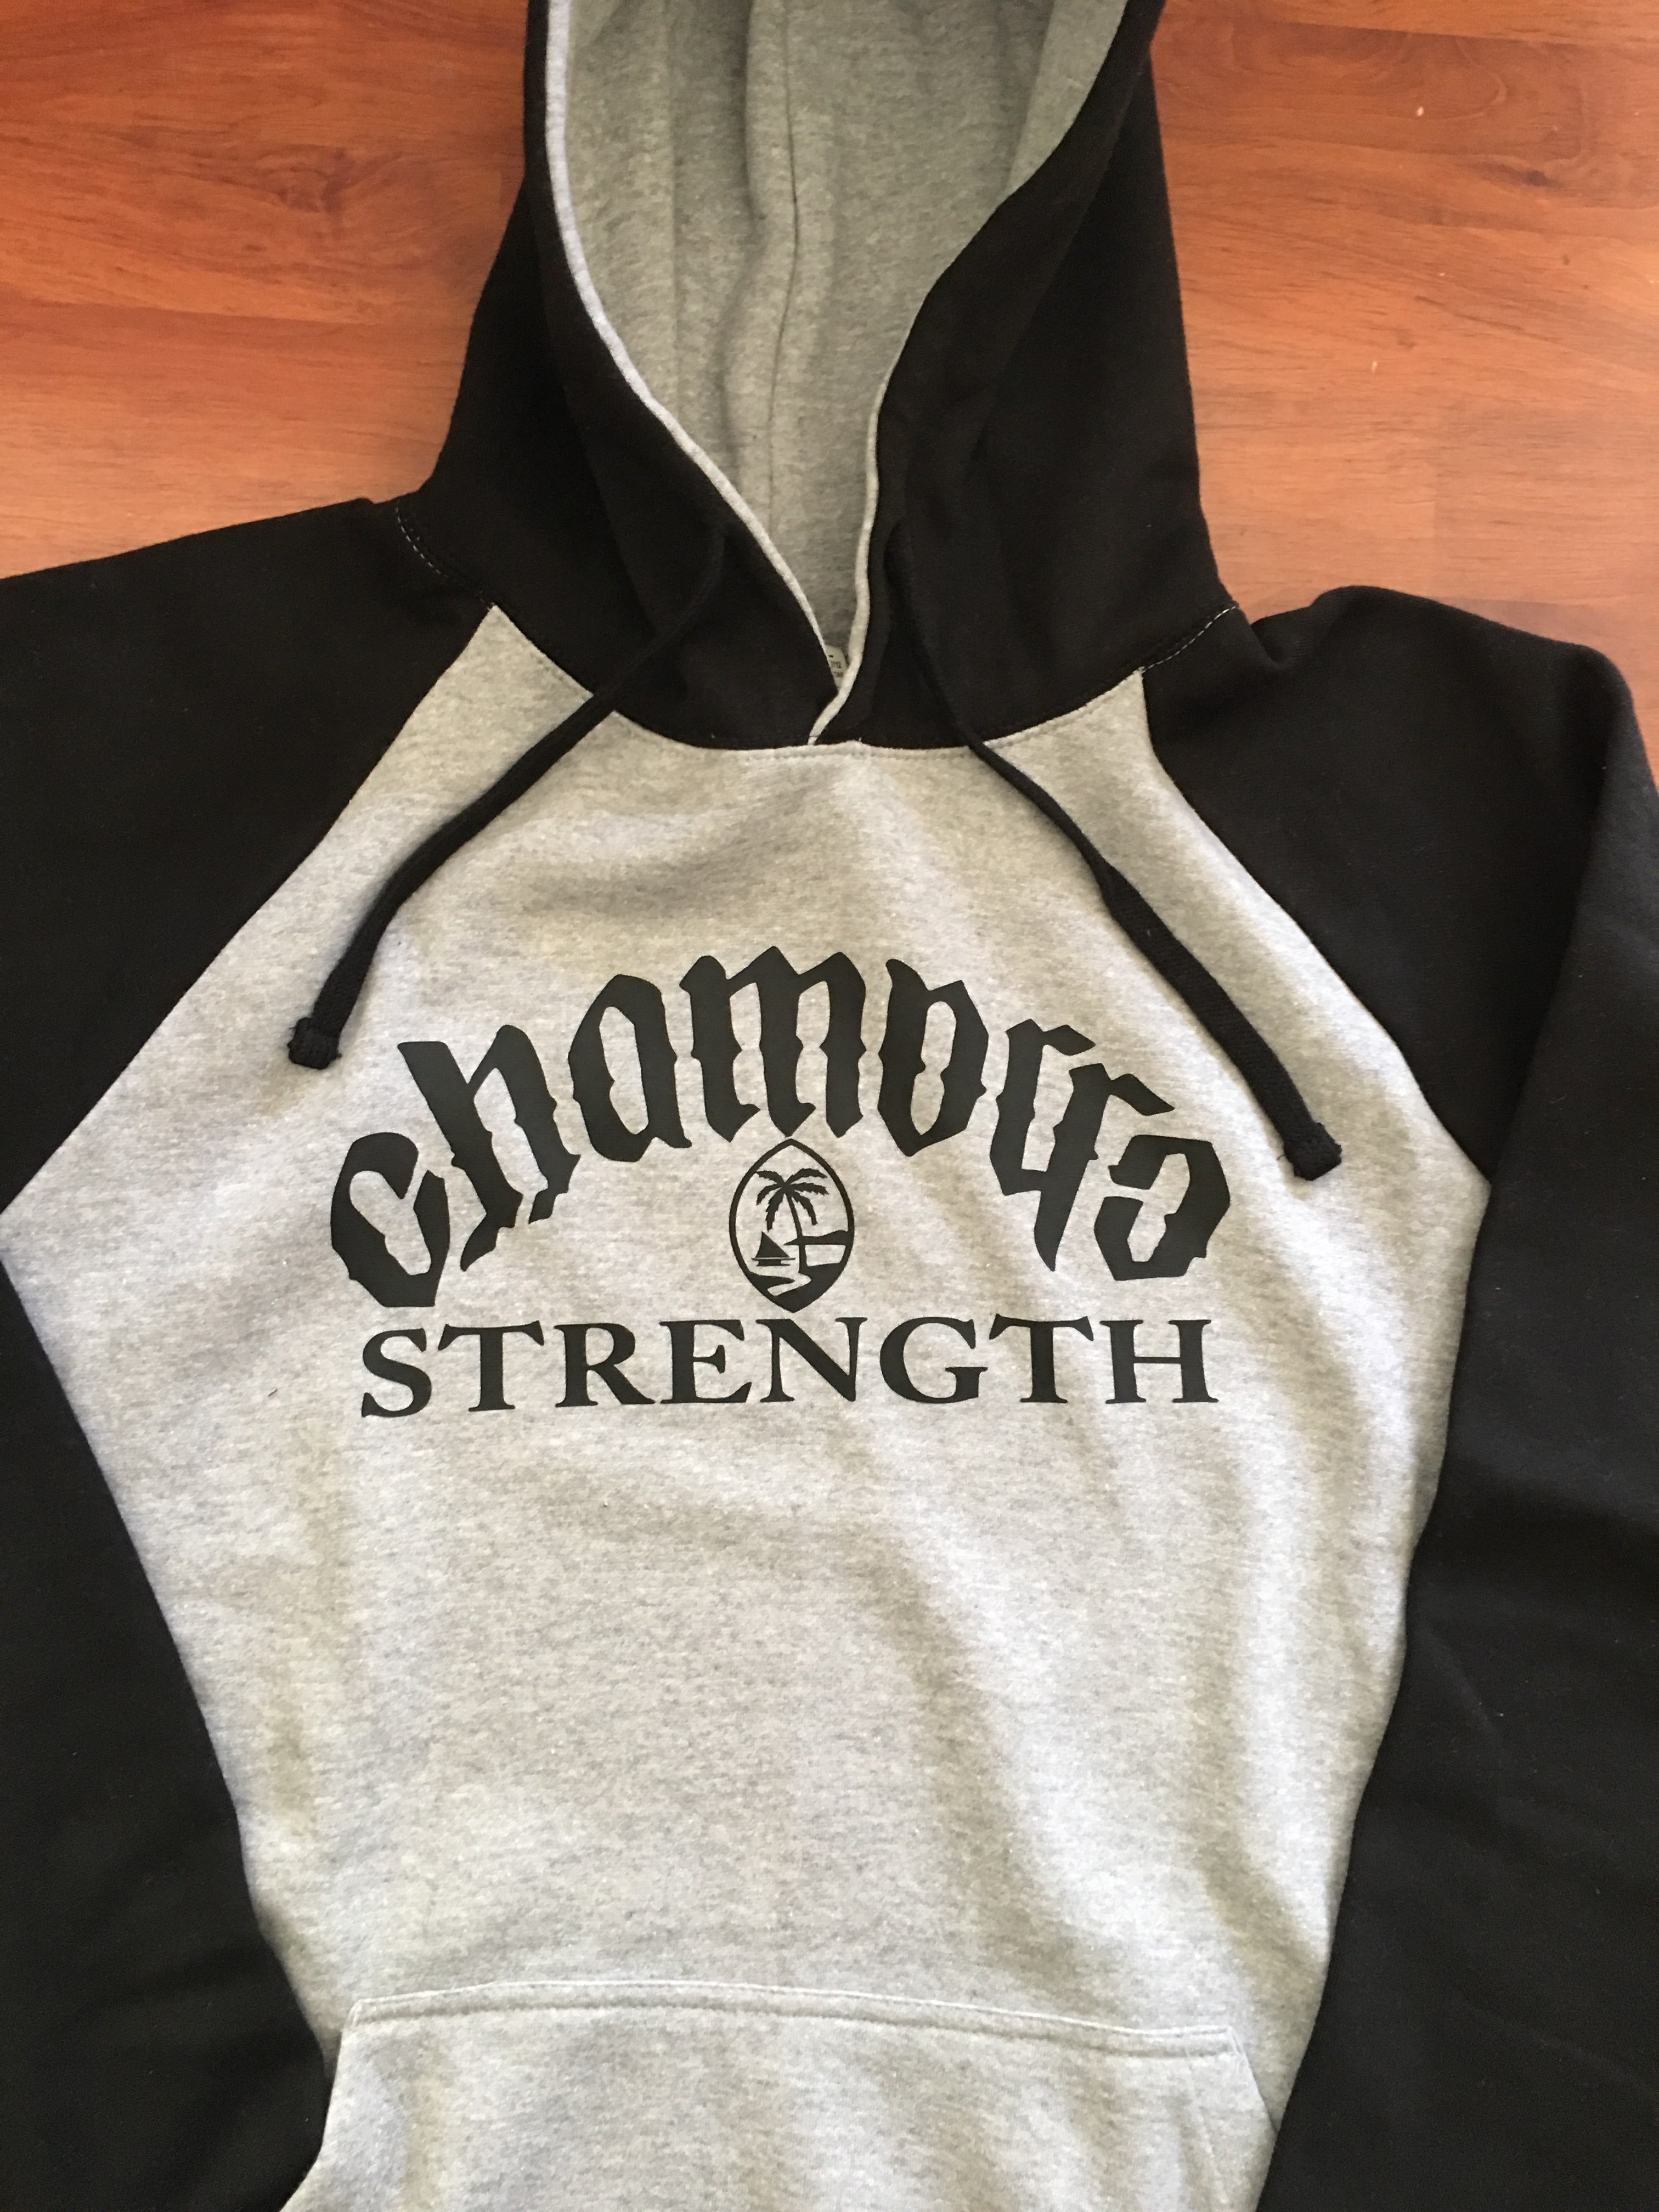 Chamorro Strength Hoodies (Two Tone)